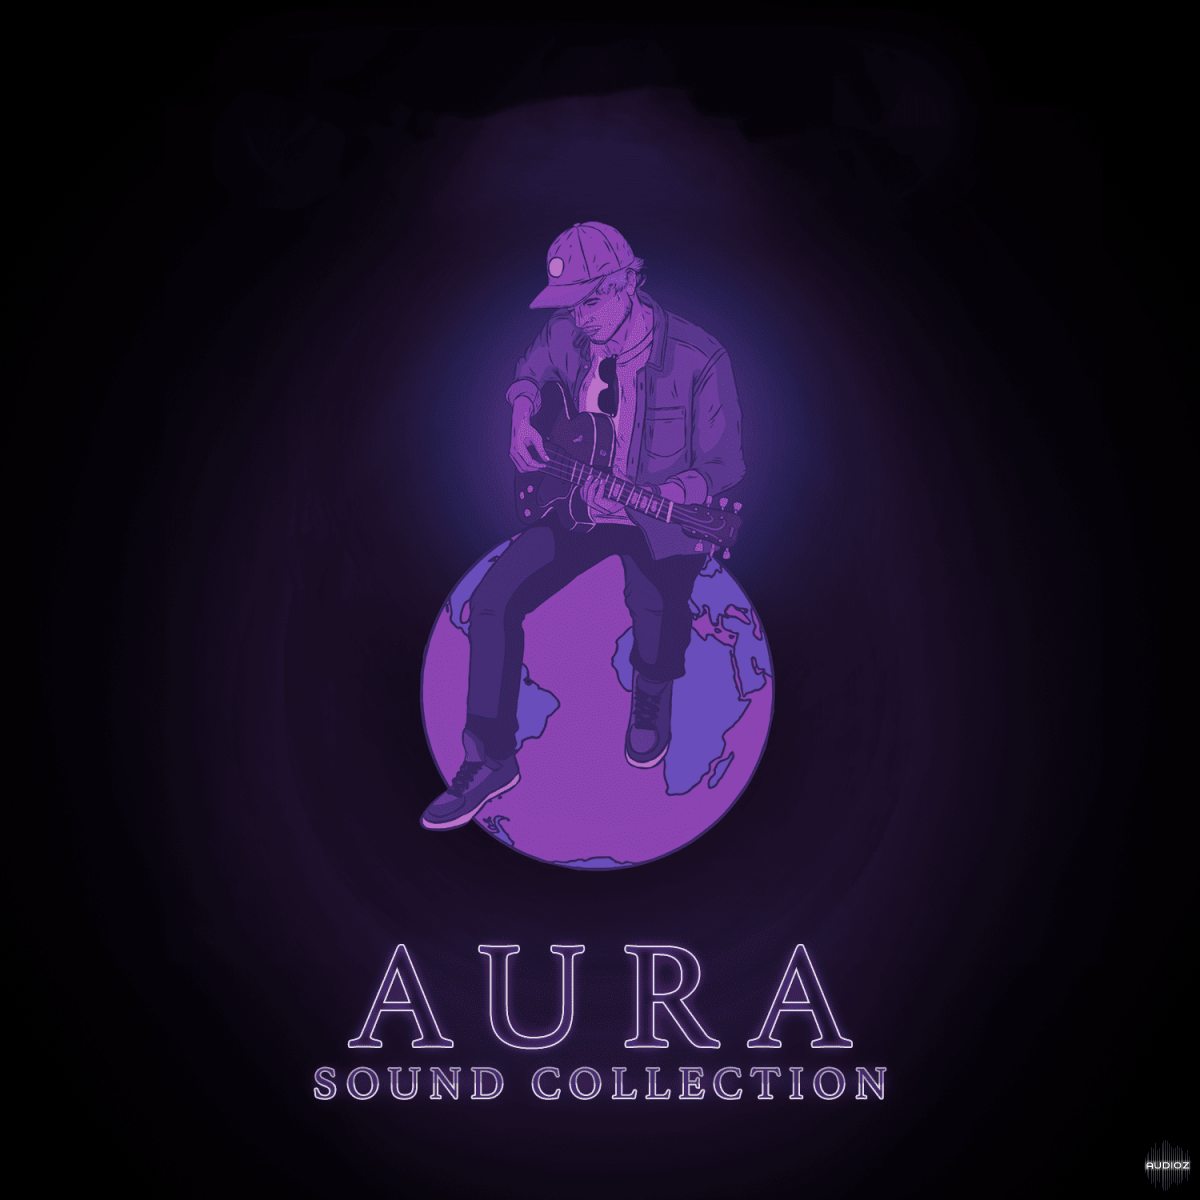 Sound collection. Аура саунд. Sounds collection. Aura Sound баннер. Картинки Аура саунд.